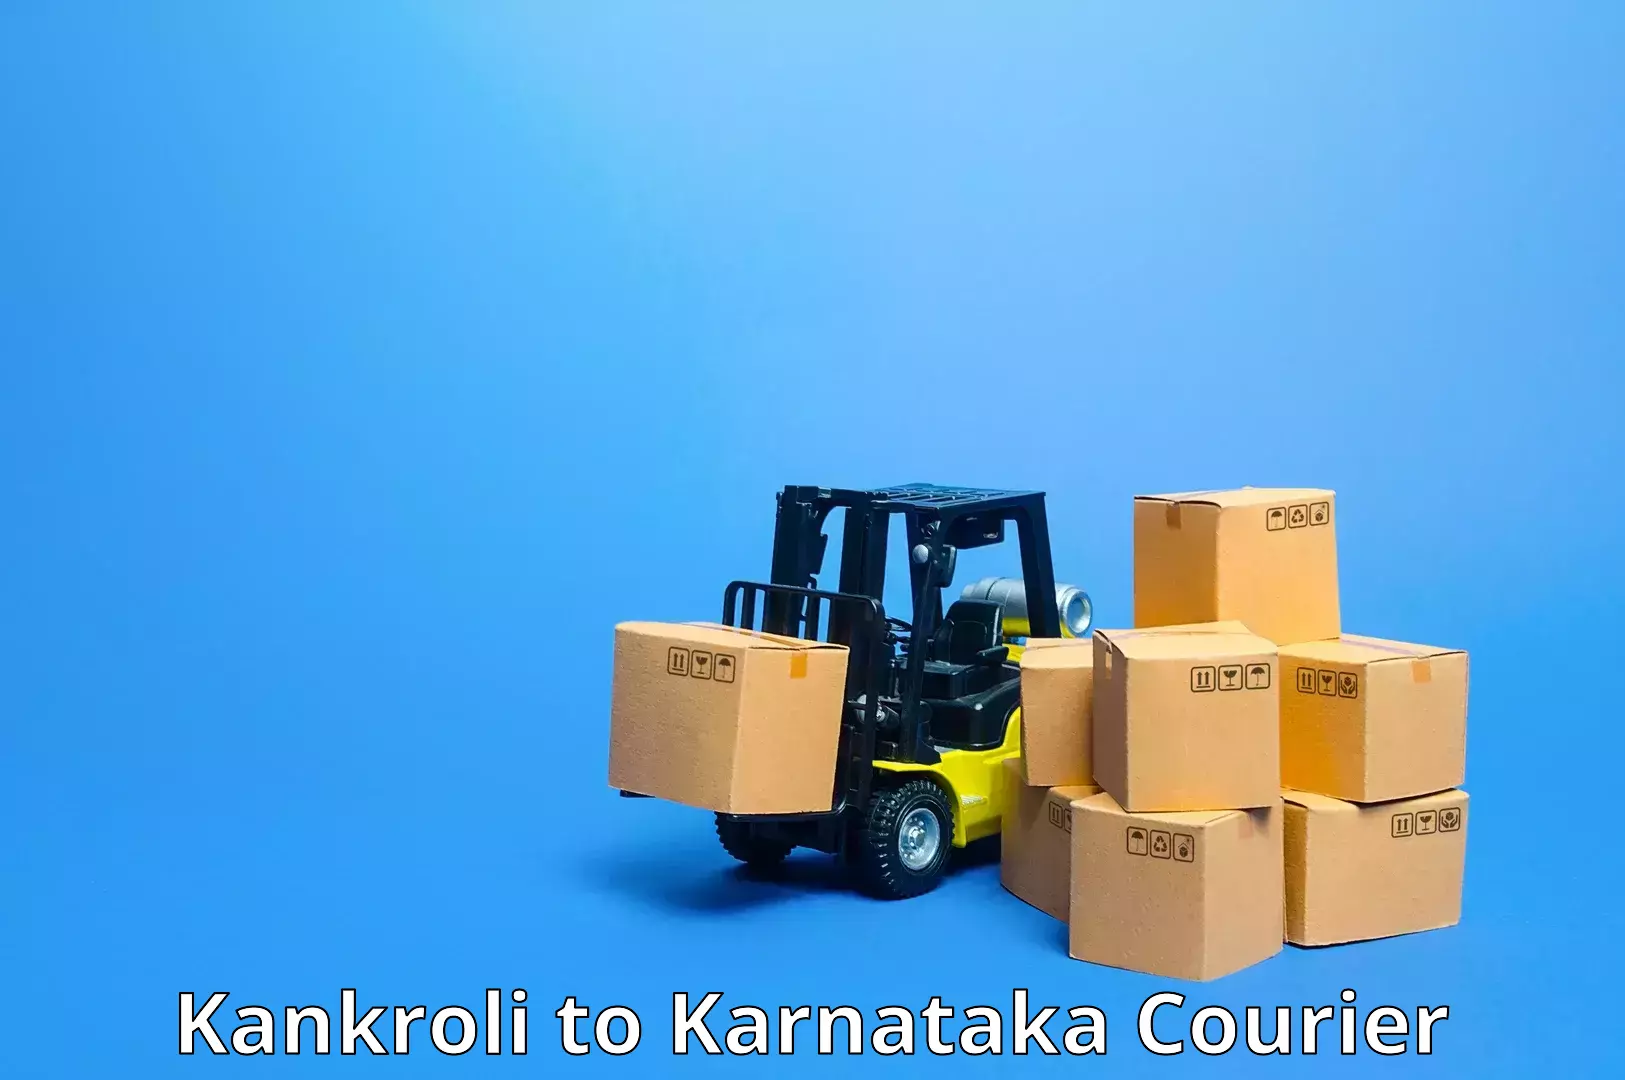 International courier networks Kankroli to Karnataka